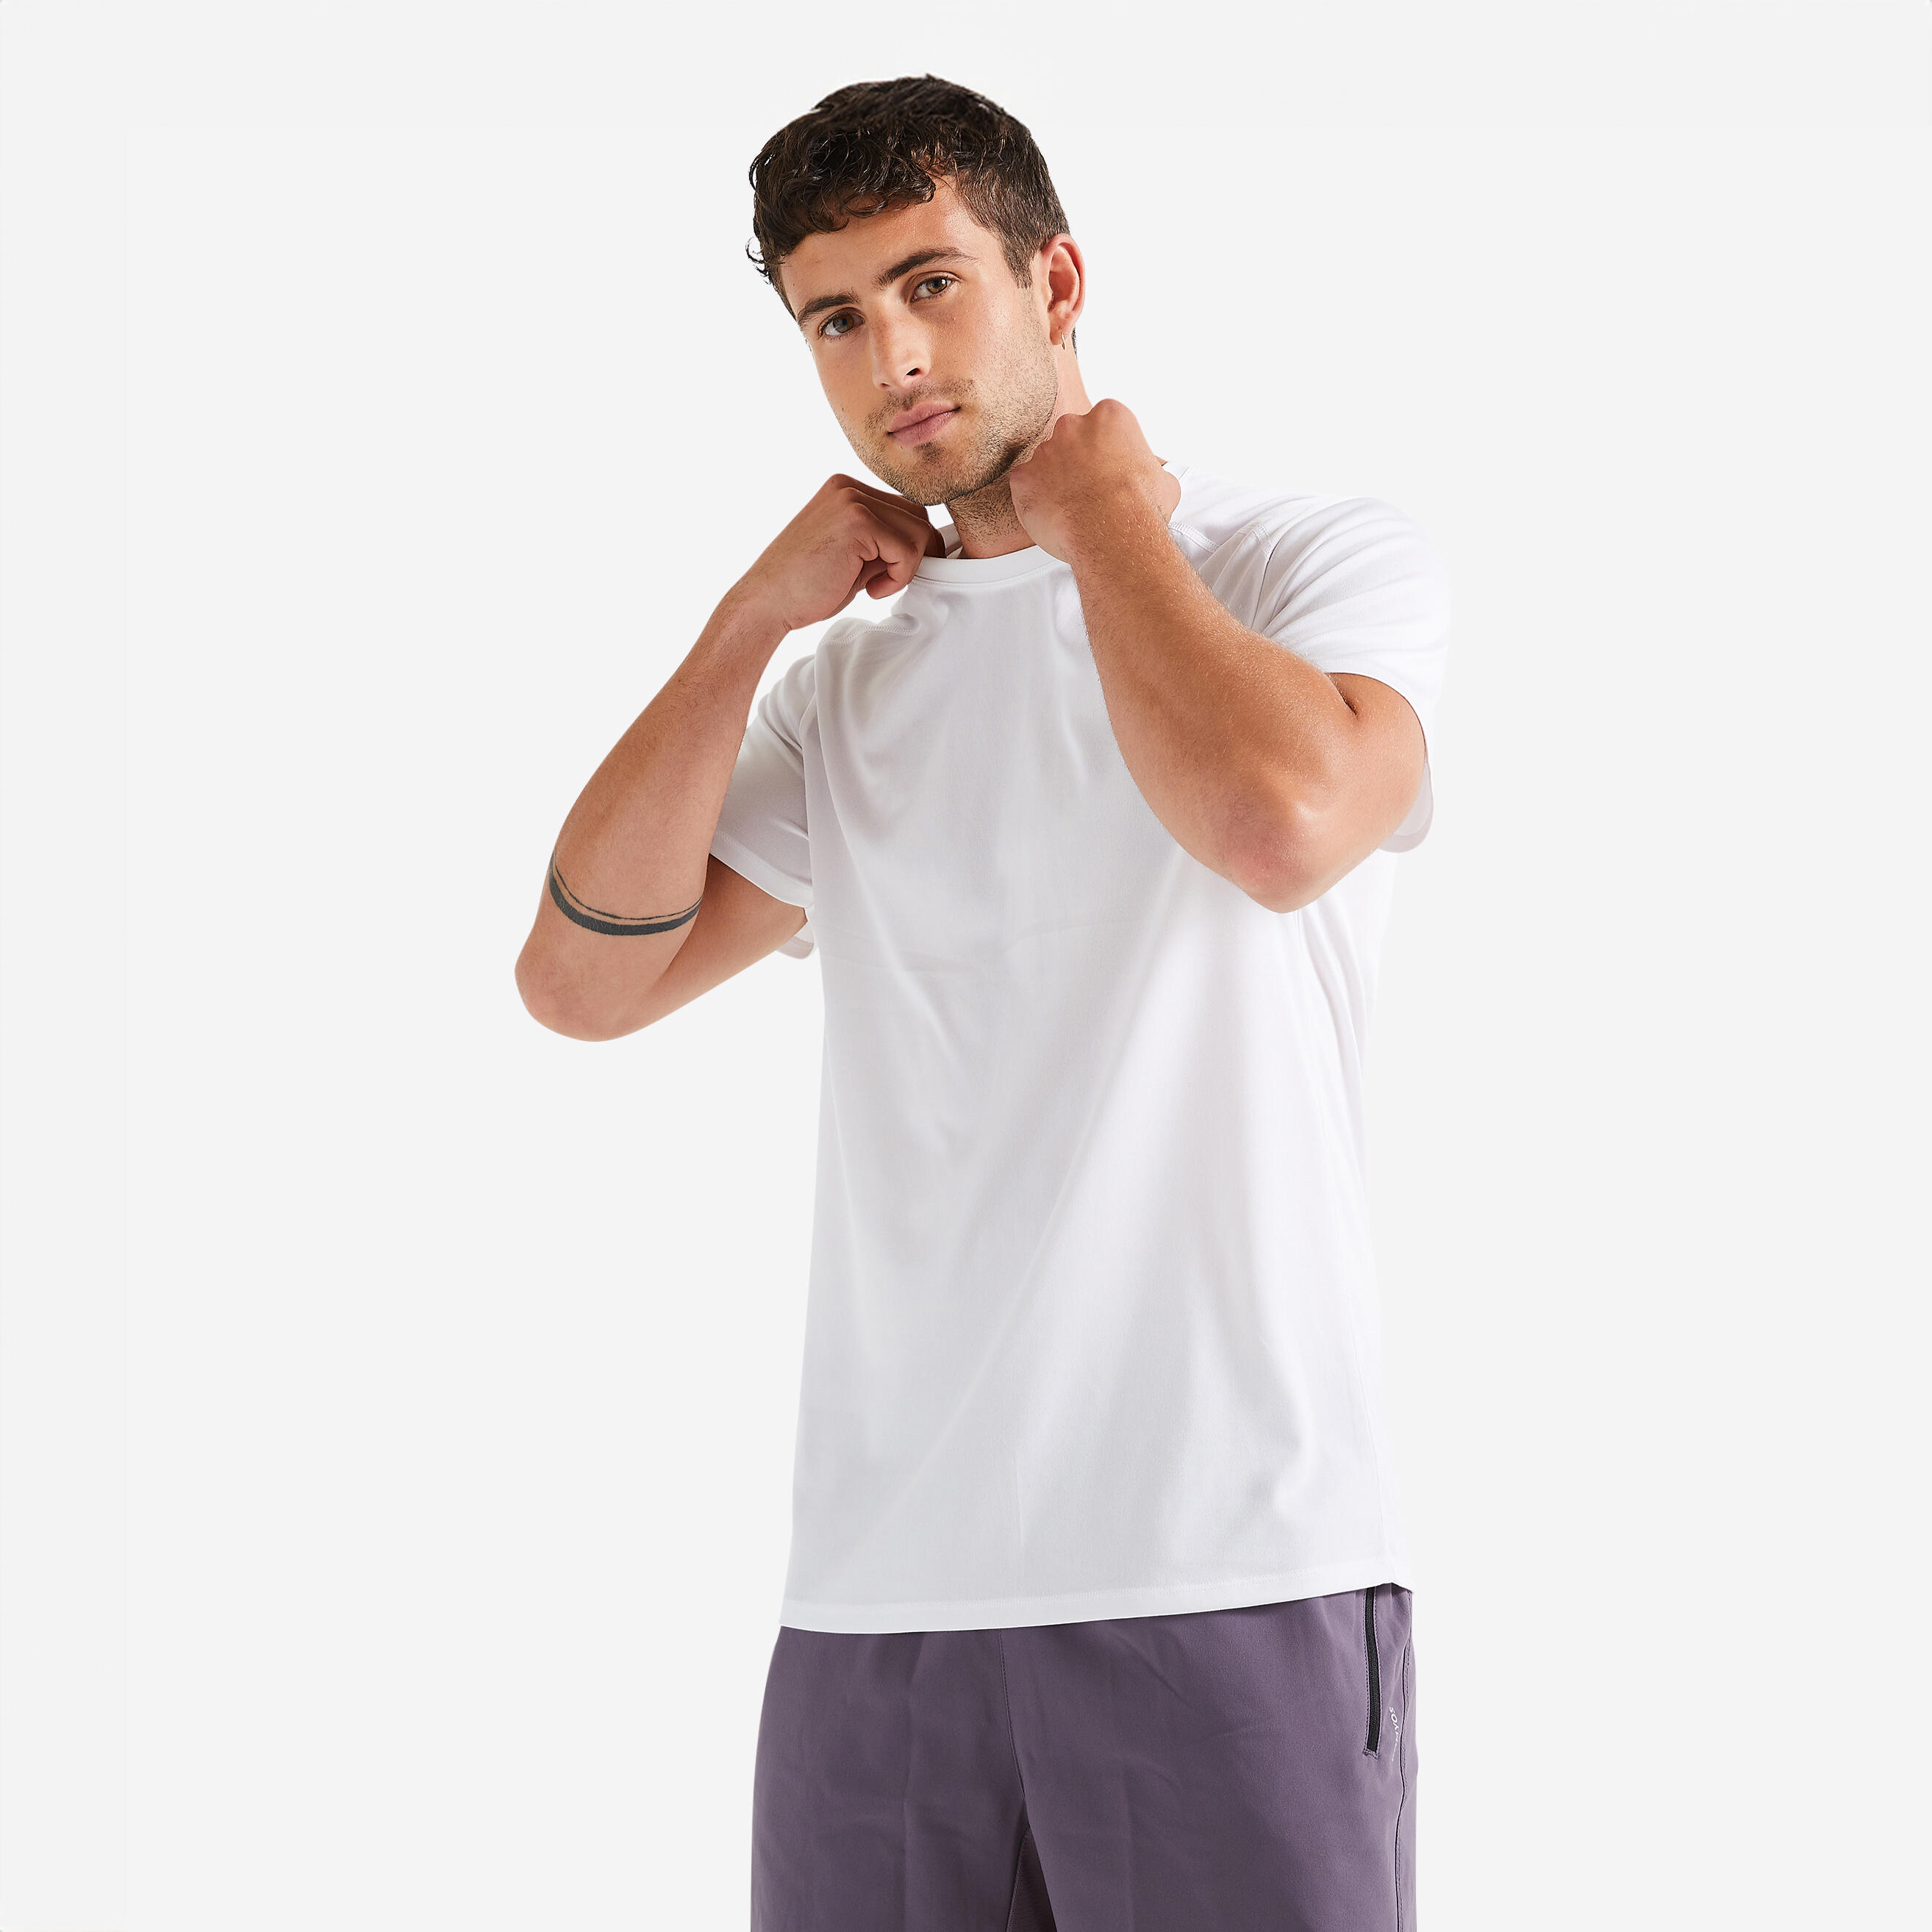 DOMYOS Men's Crew Neck Breathable Essential Fitness T-Shirt - Plain White